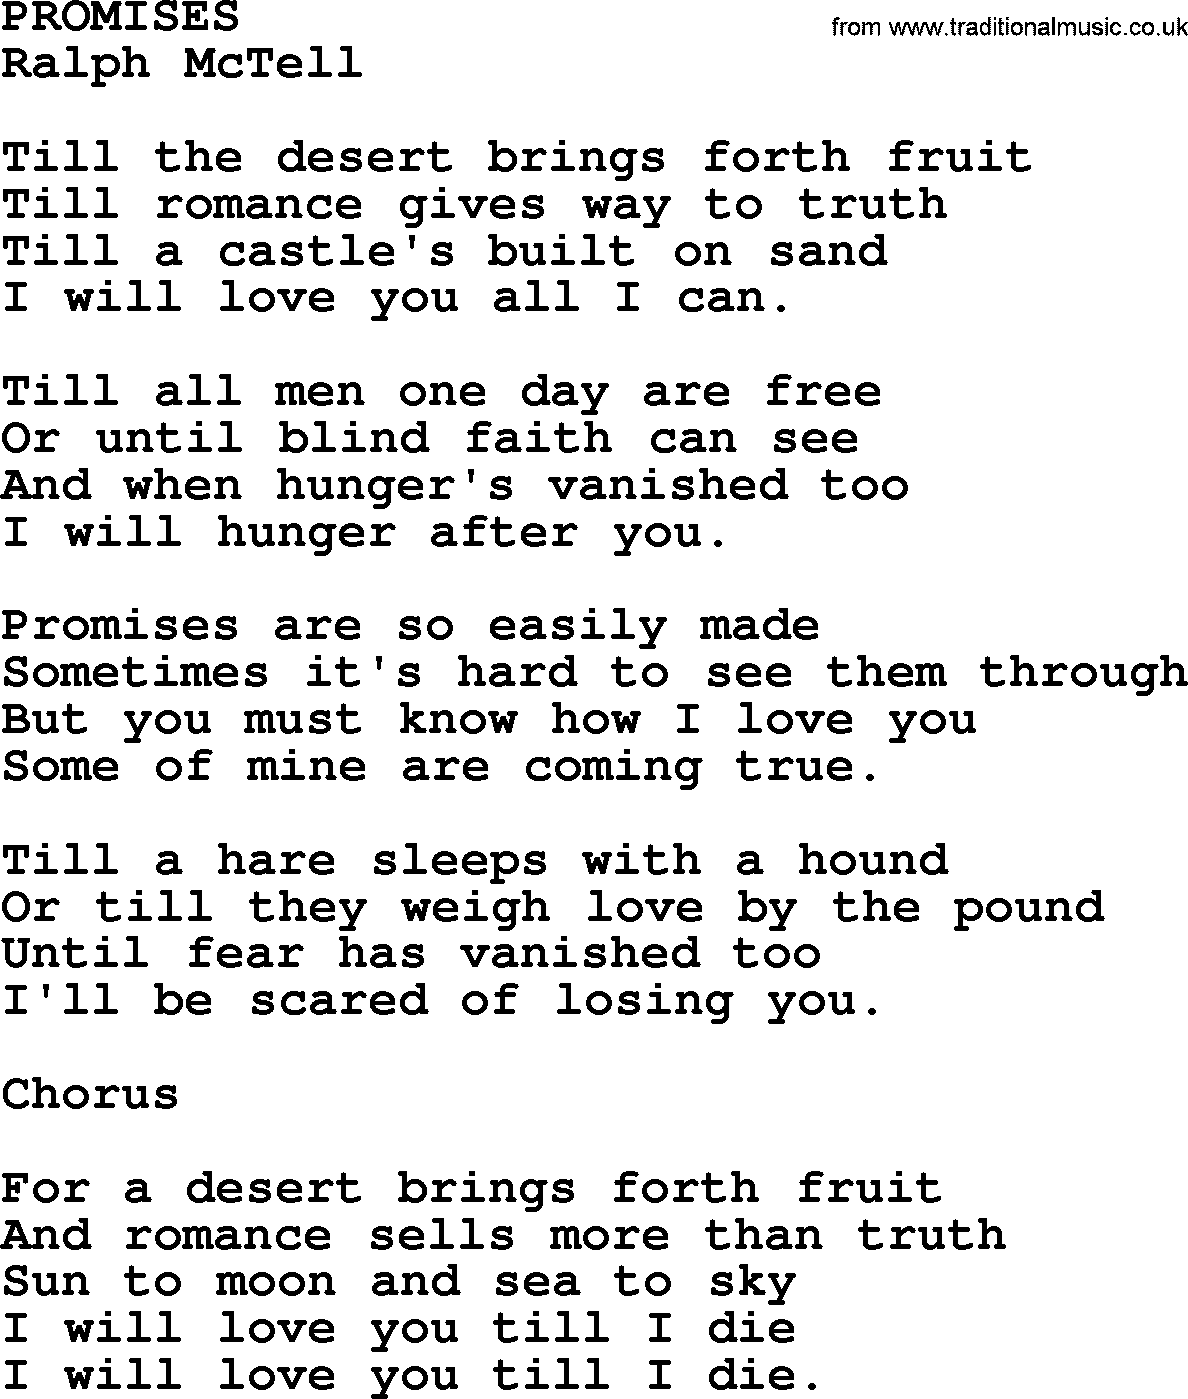 Ralph McTell Song: Promises, lyrics